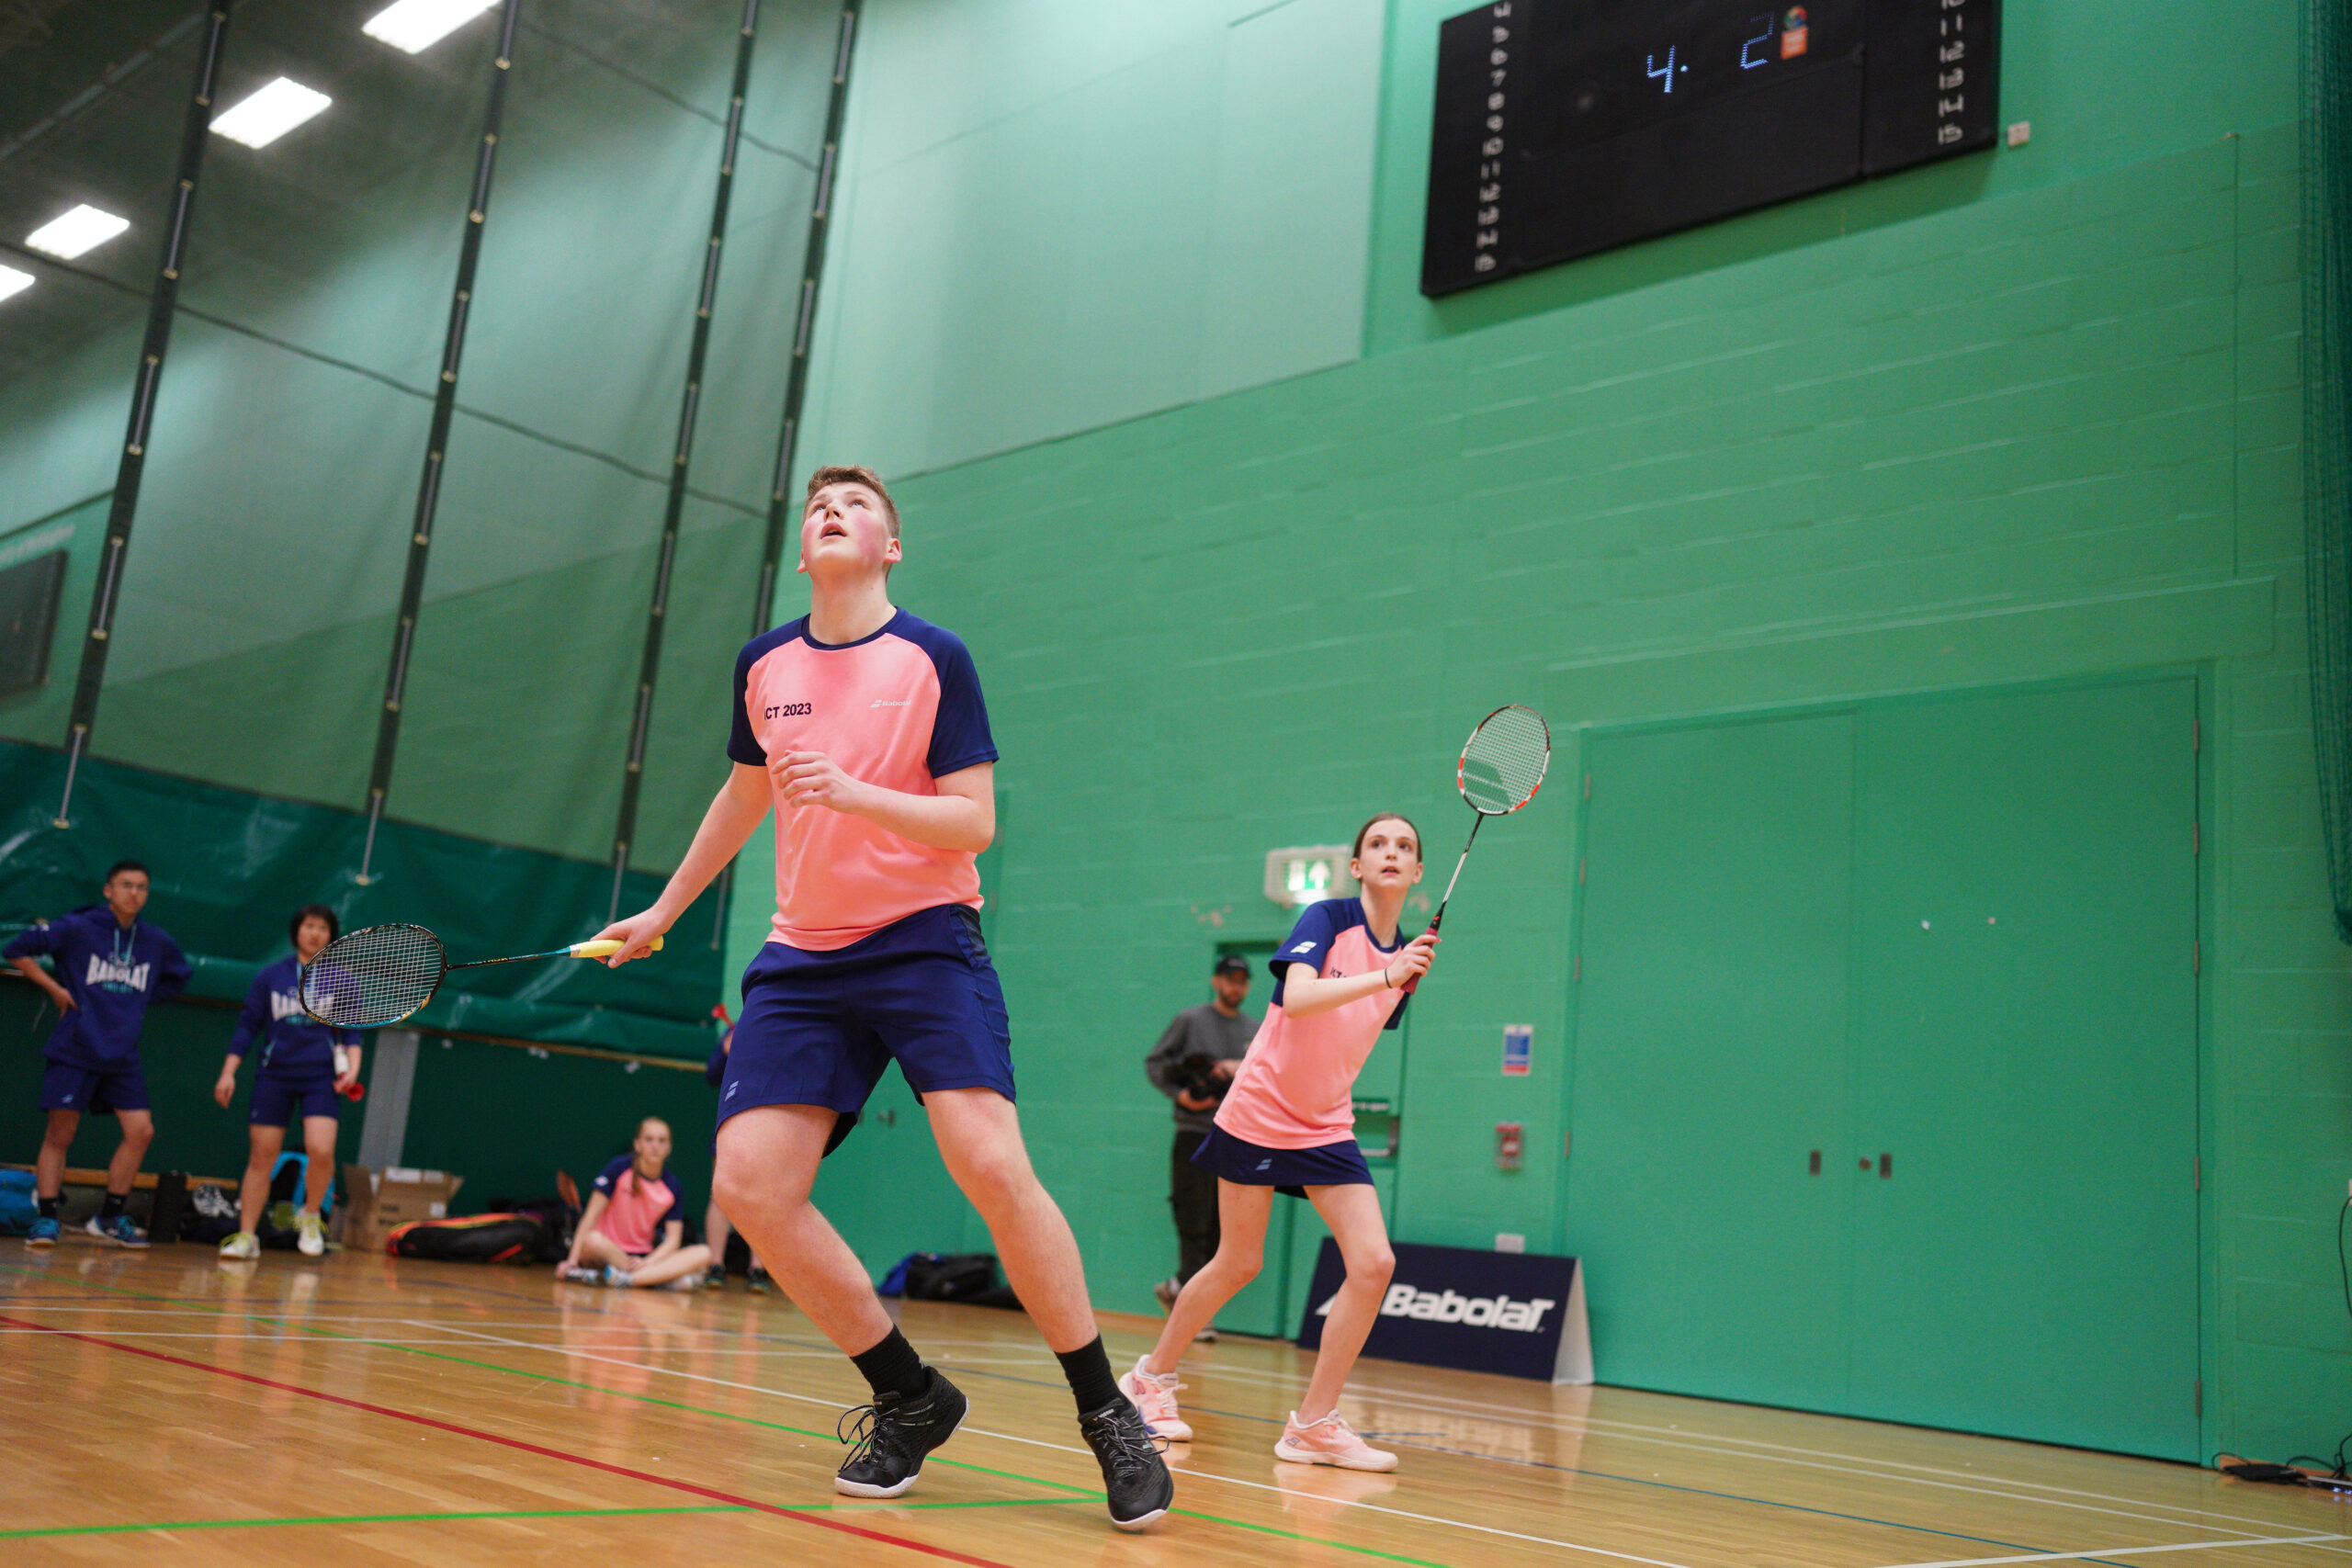 New Babolat partnership supports National Schools Championships | Badminton England